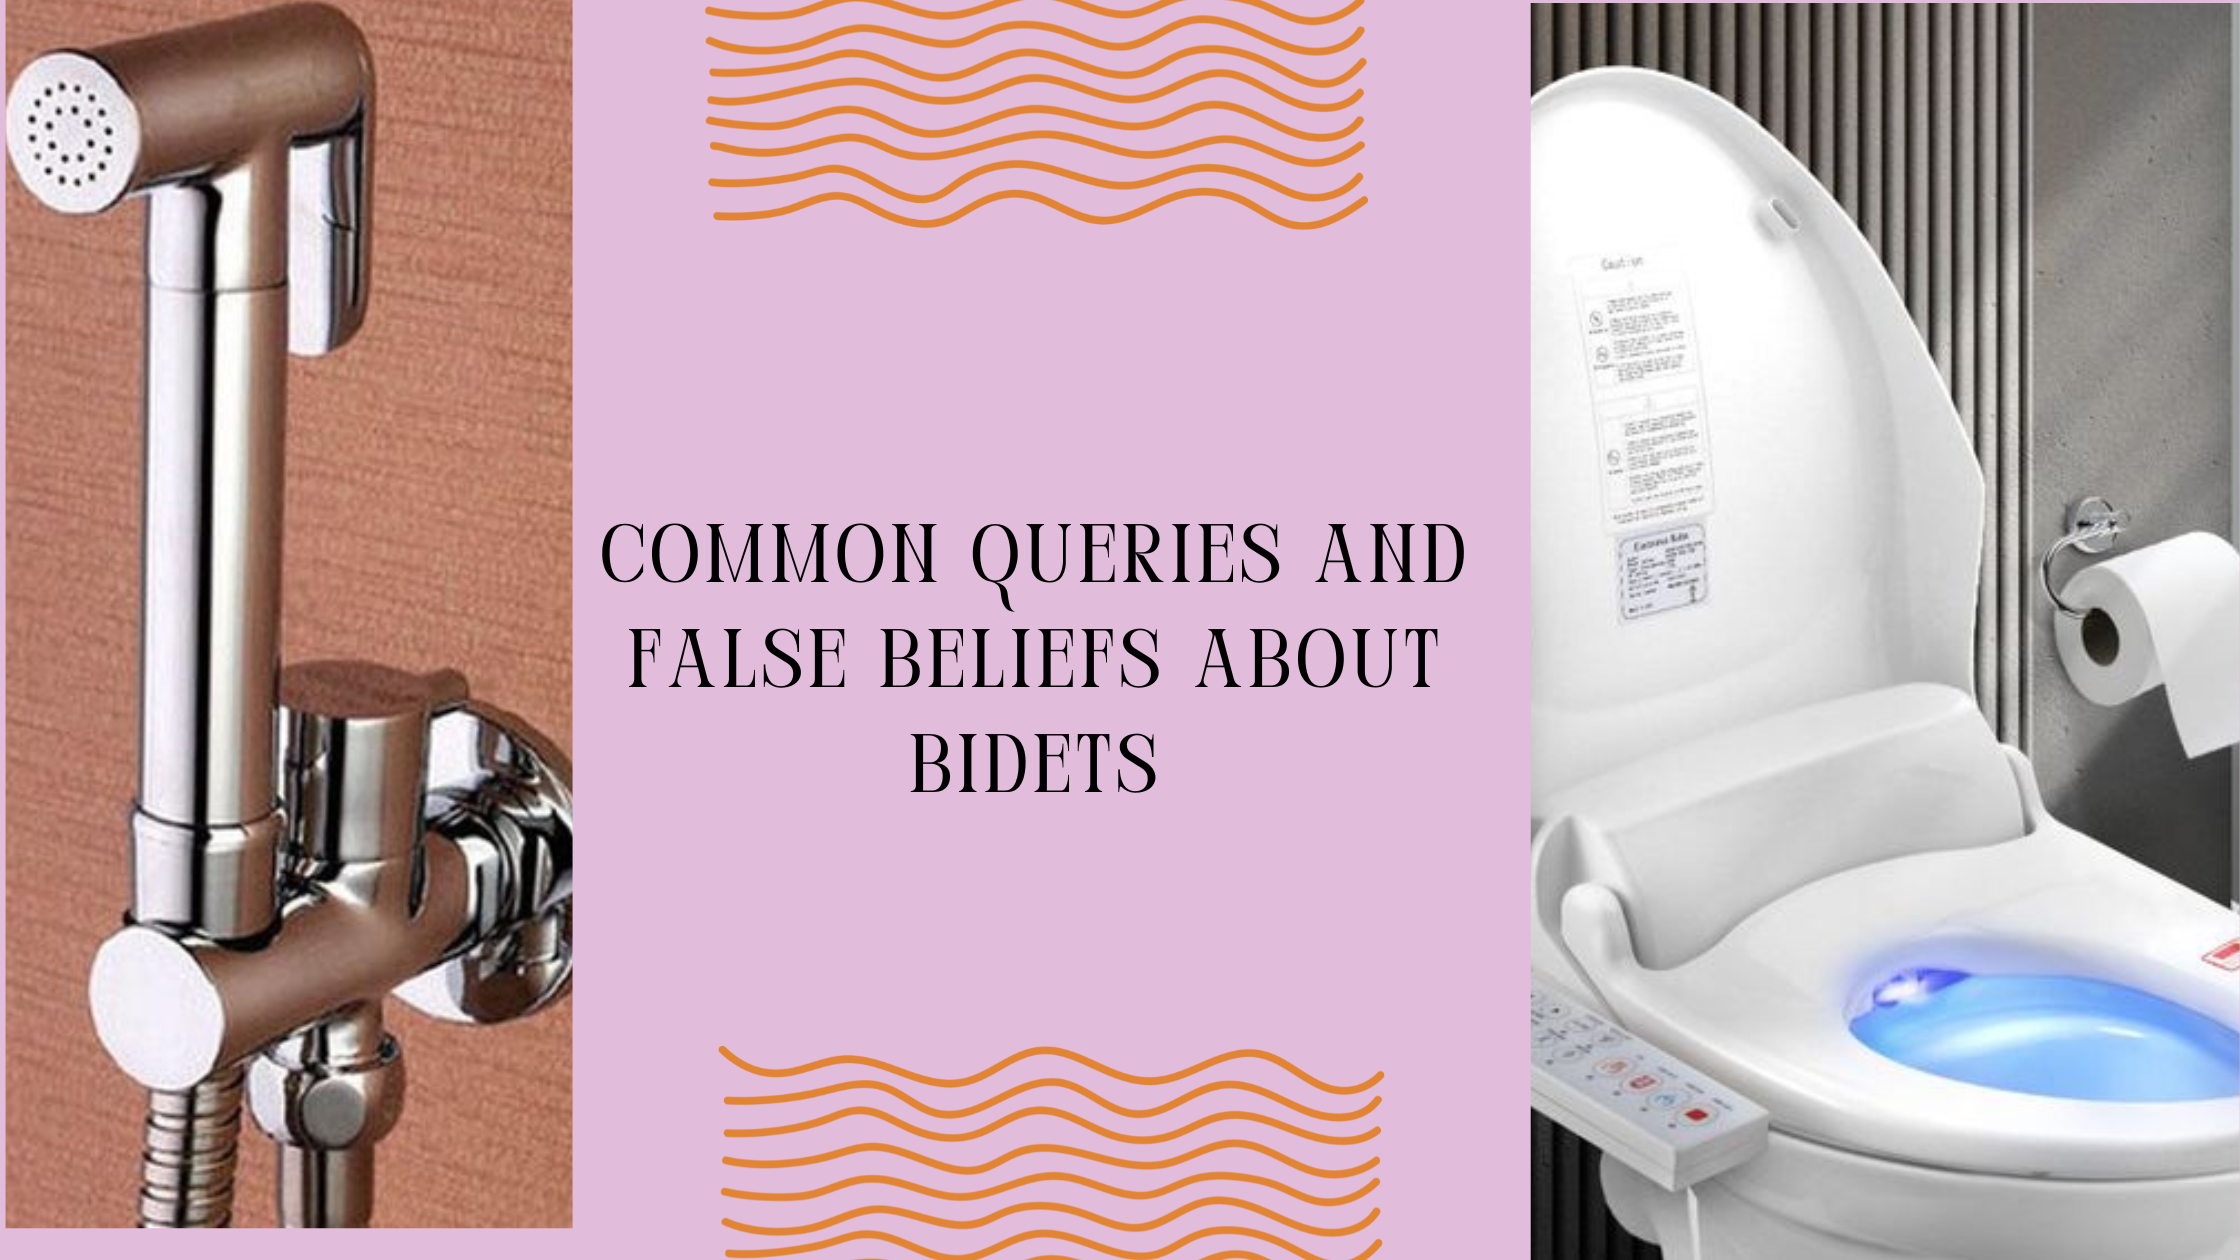 Common queries and false beliefs about bidets